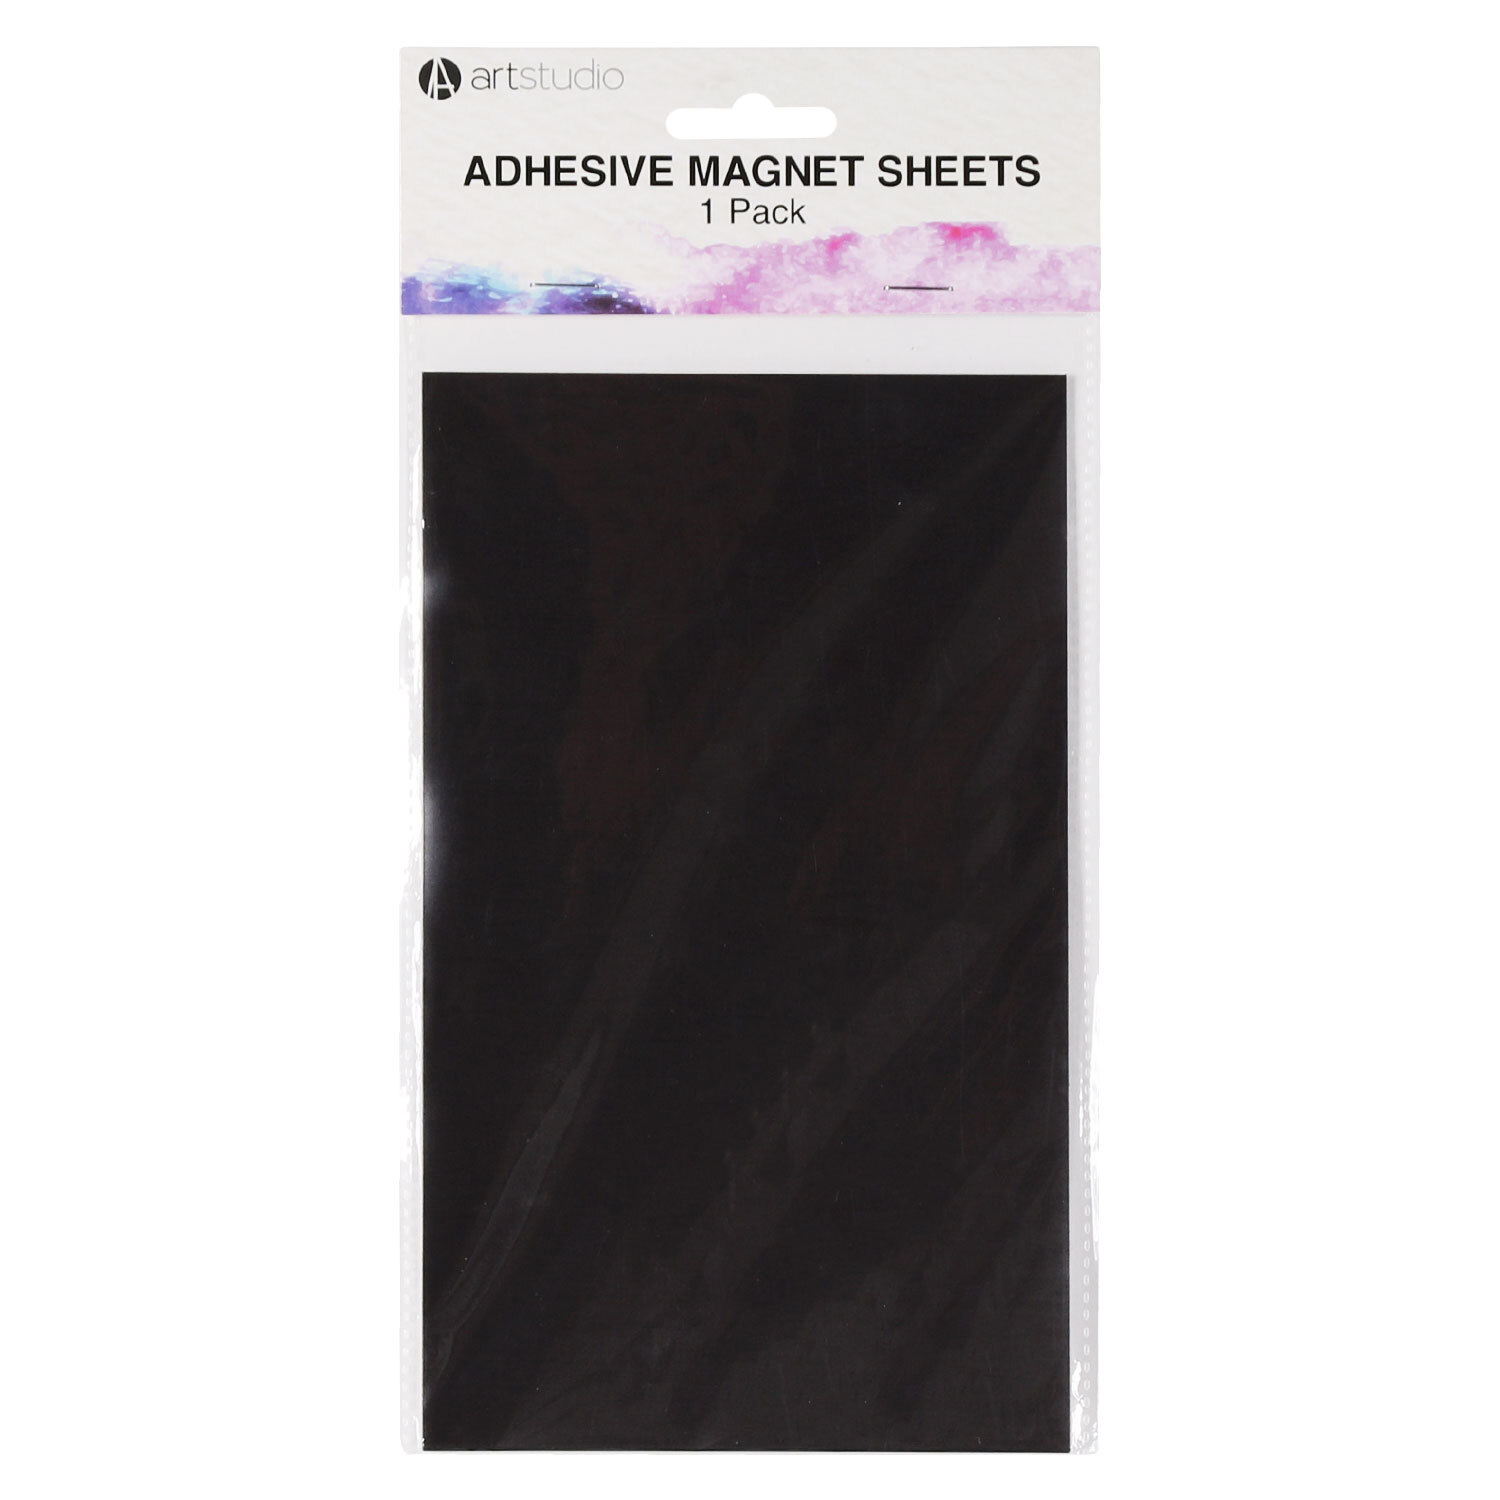 Art Studio Adhesive Magnet Sheets Image